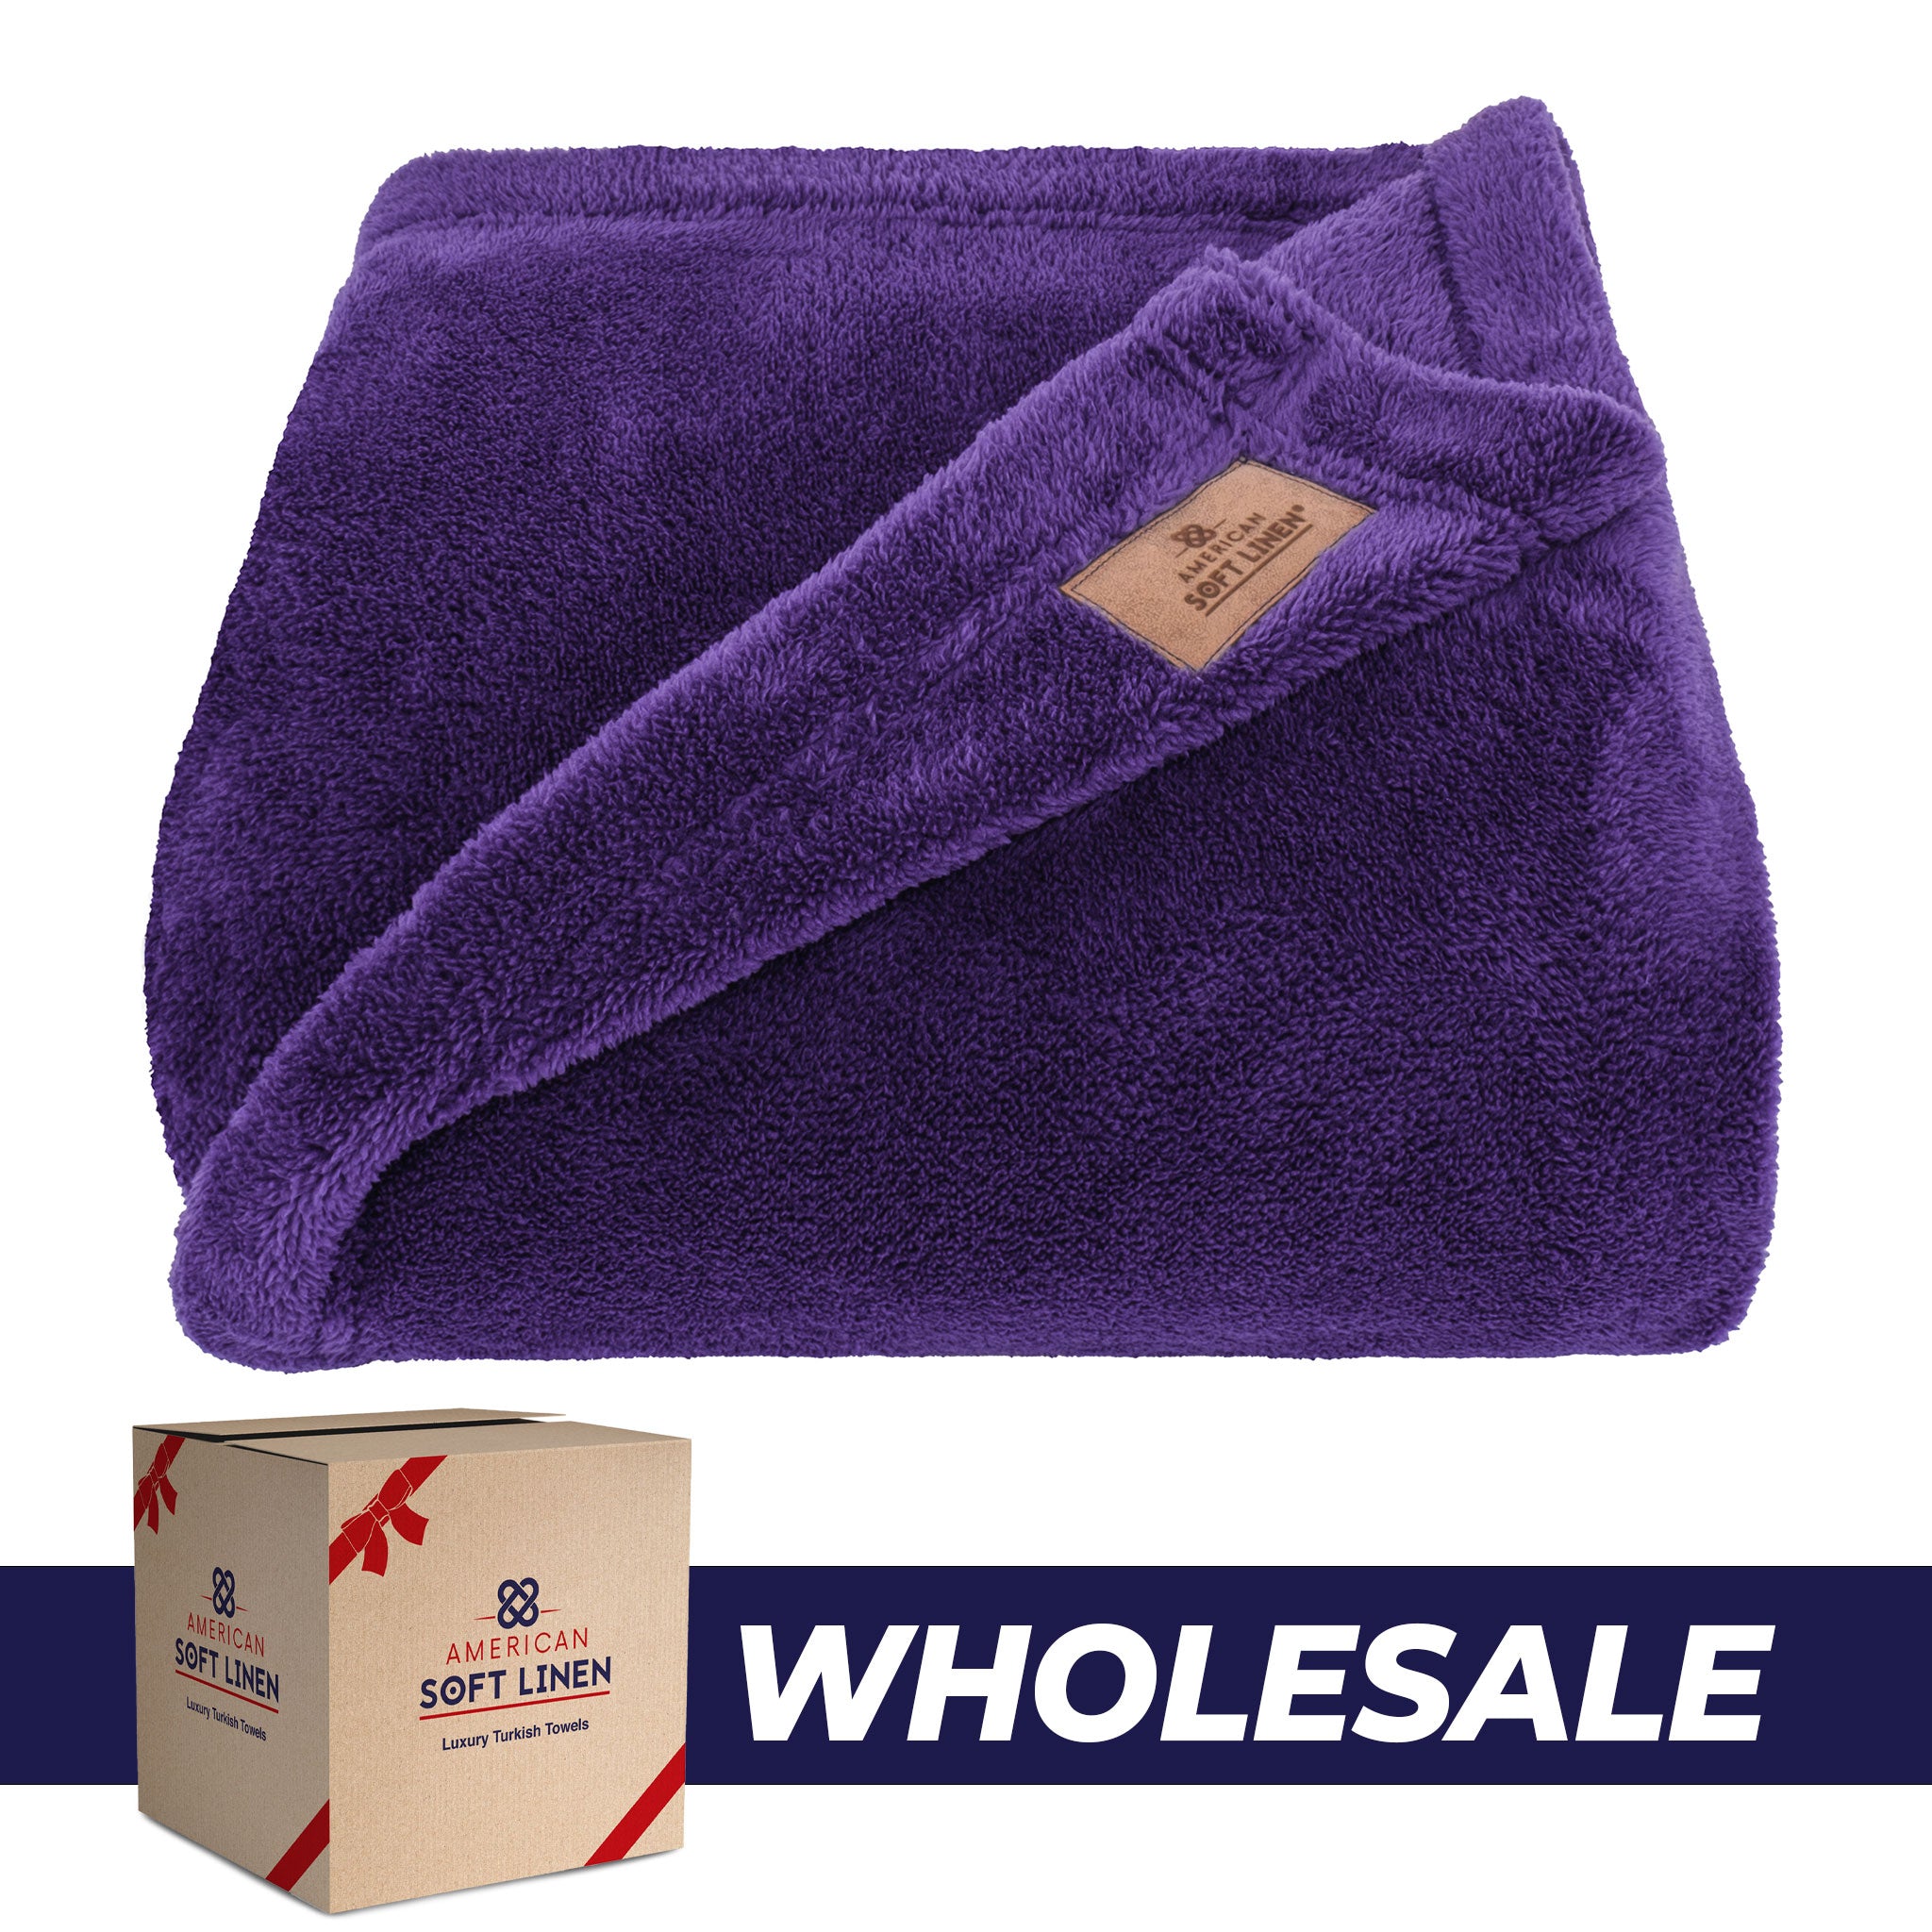 American Soft Linen - Bedding Fleece Blanket - Wholesale - 15 Set Case Pack - Twin Size 60x80 inches - Purple - 0